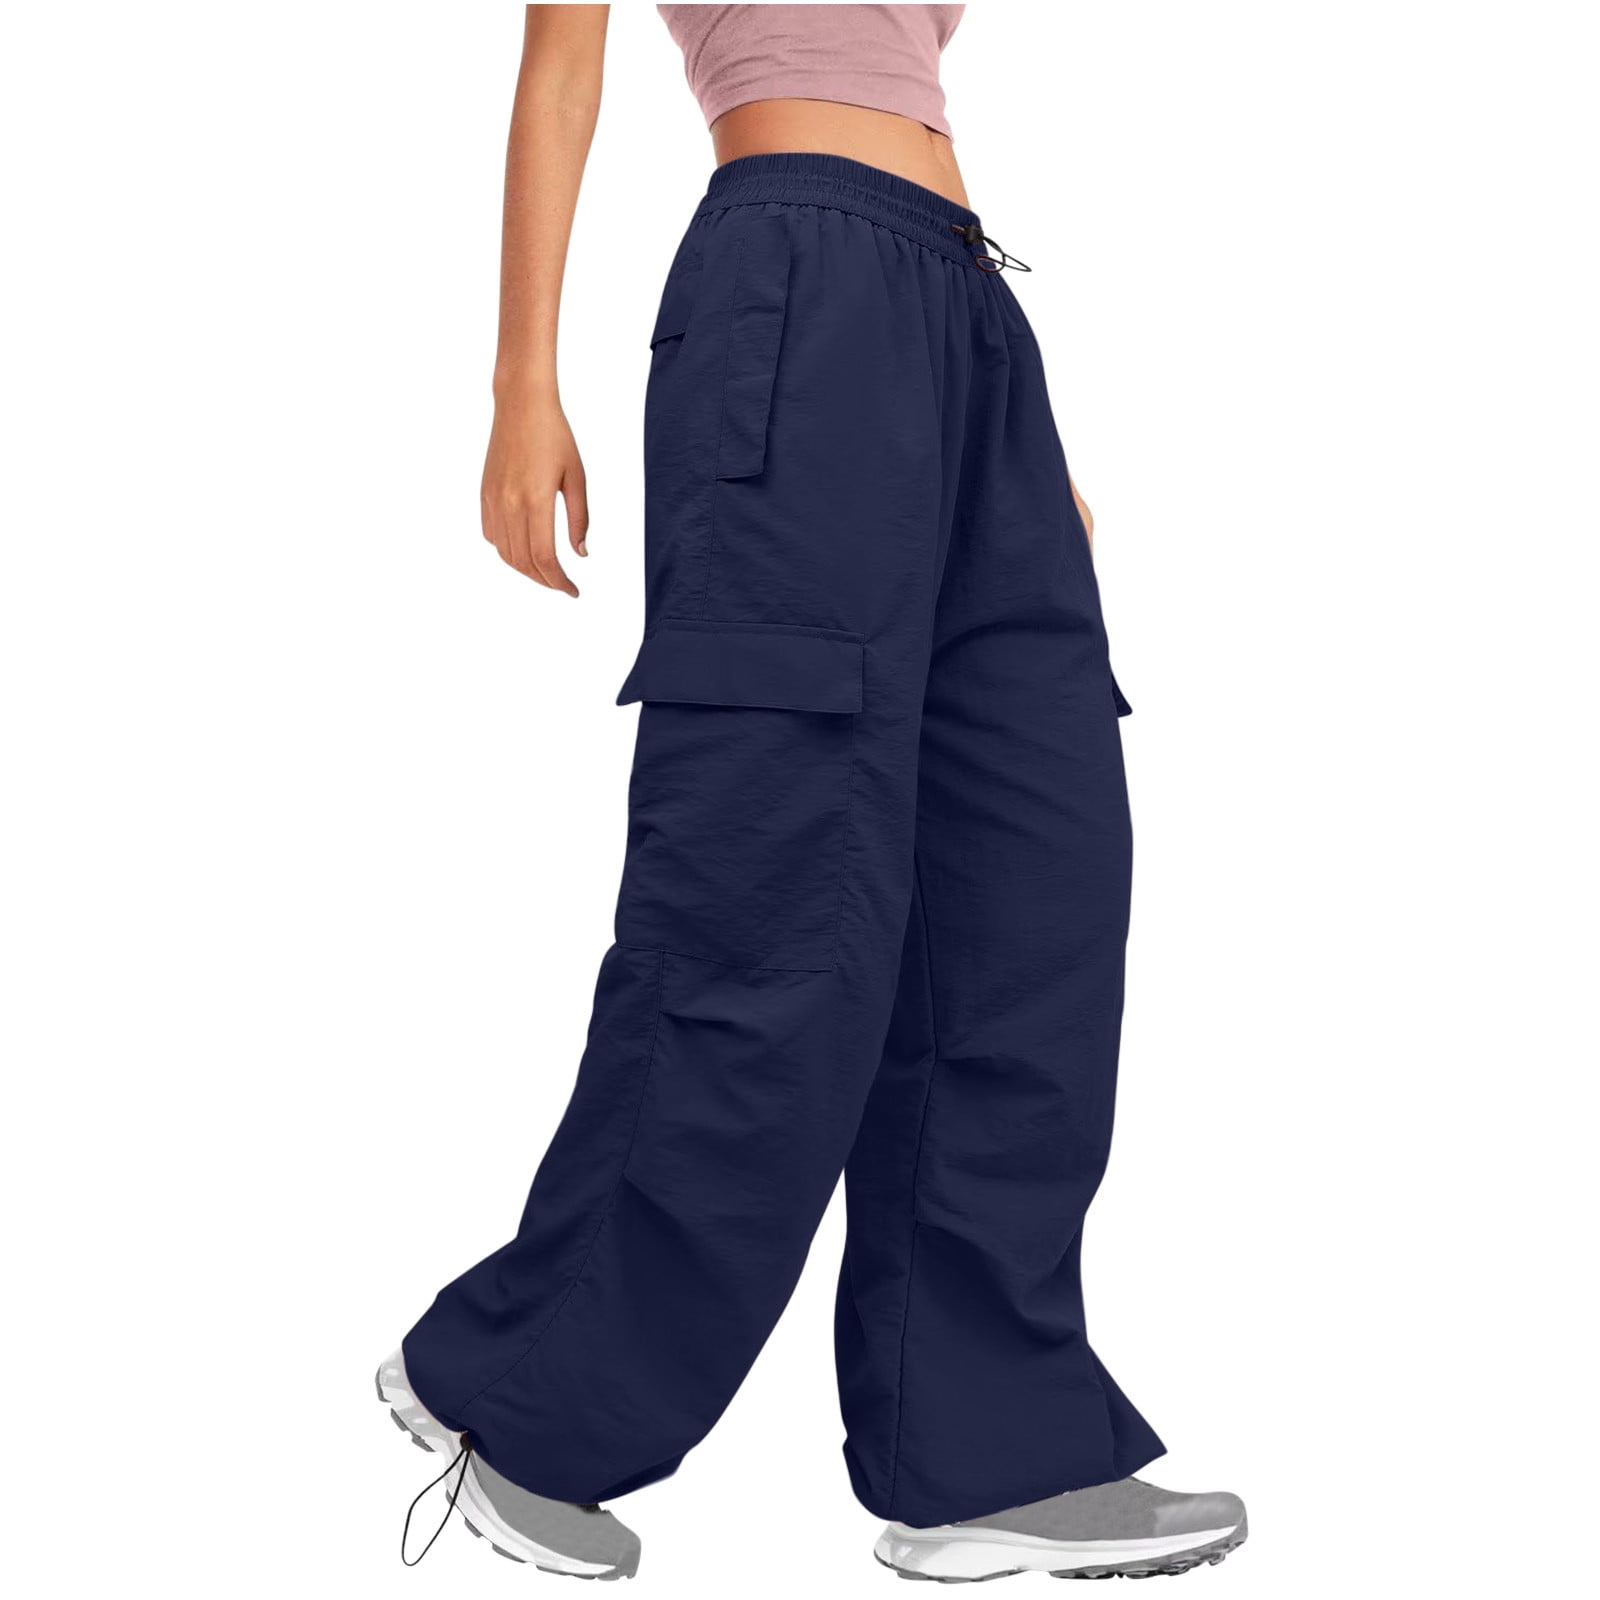 KJIUQ Parachute Pants for Women Baggy Cargo Pants Multi-Pocket